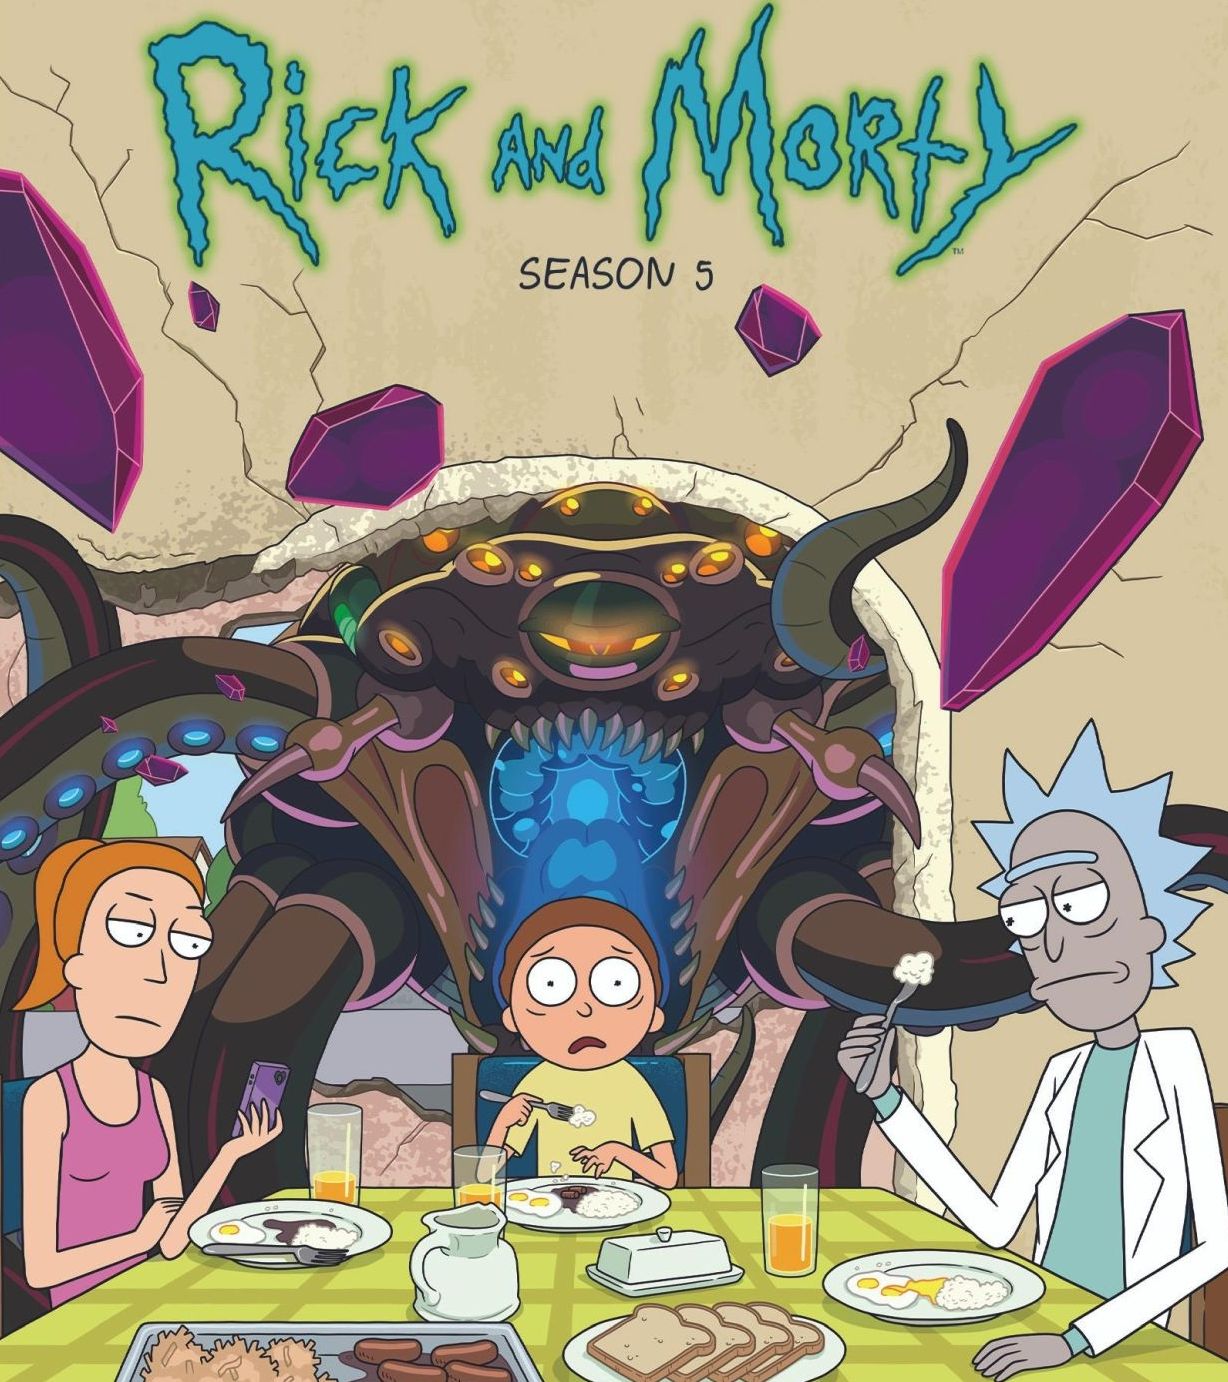 Is “Rick and Morty Season 5” on Hulu